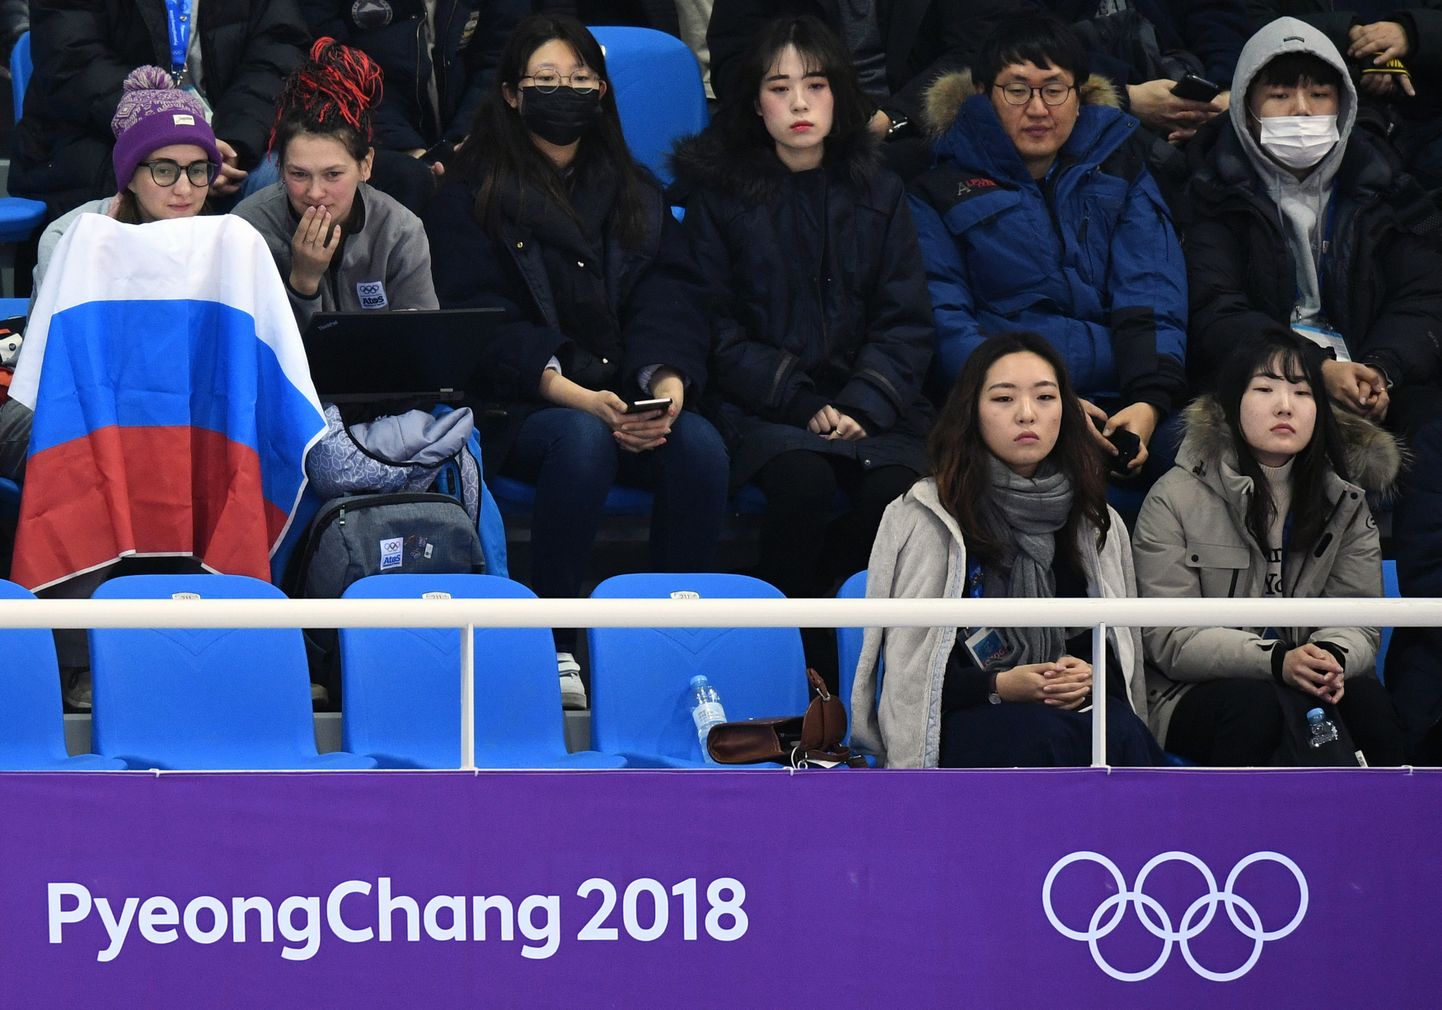 Venemaa koondise poolehoidjaid leidub Pyeongchangist omajagu.